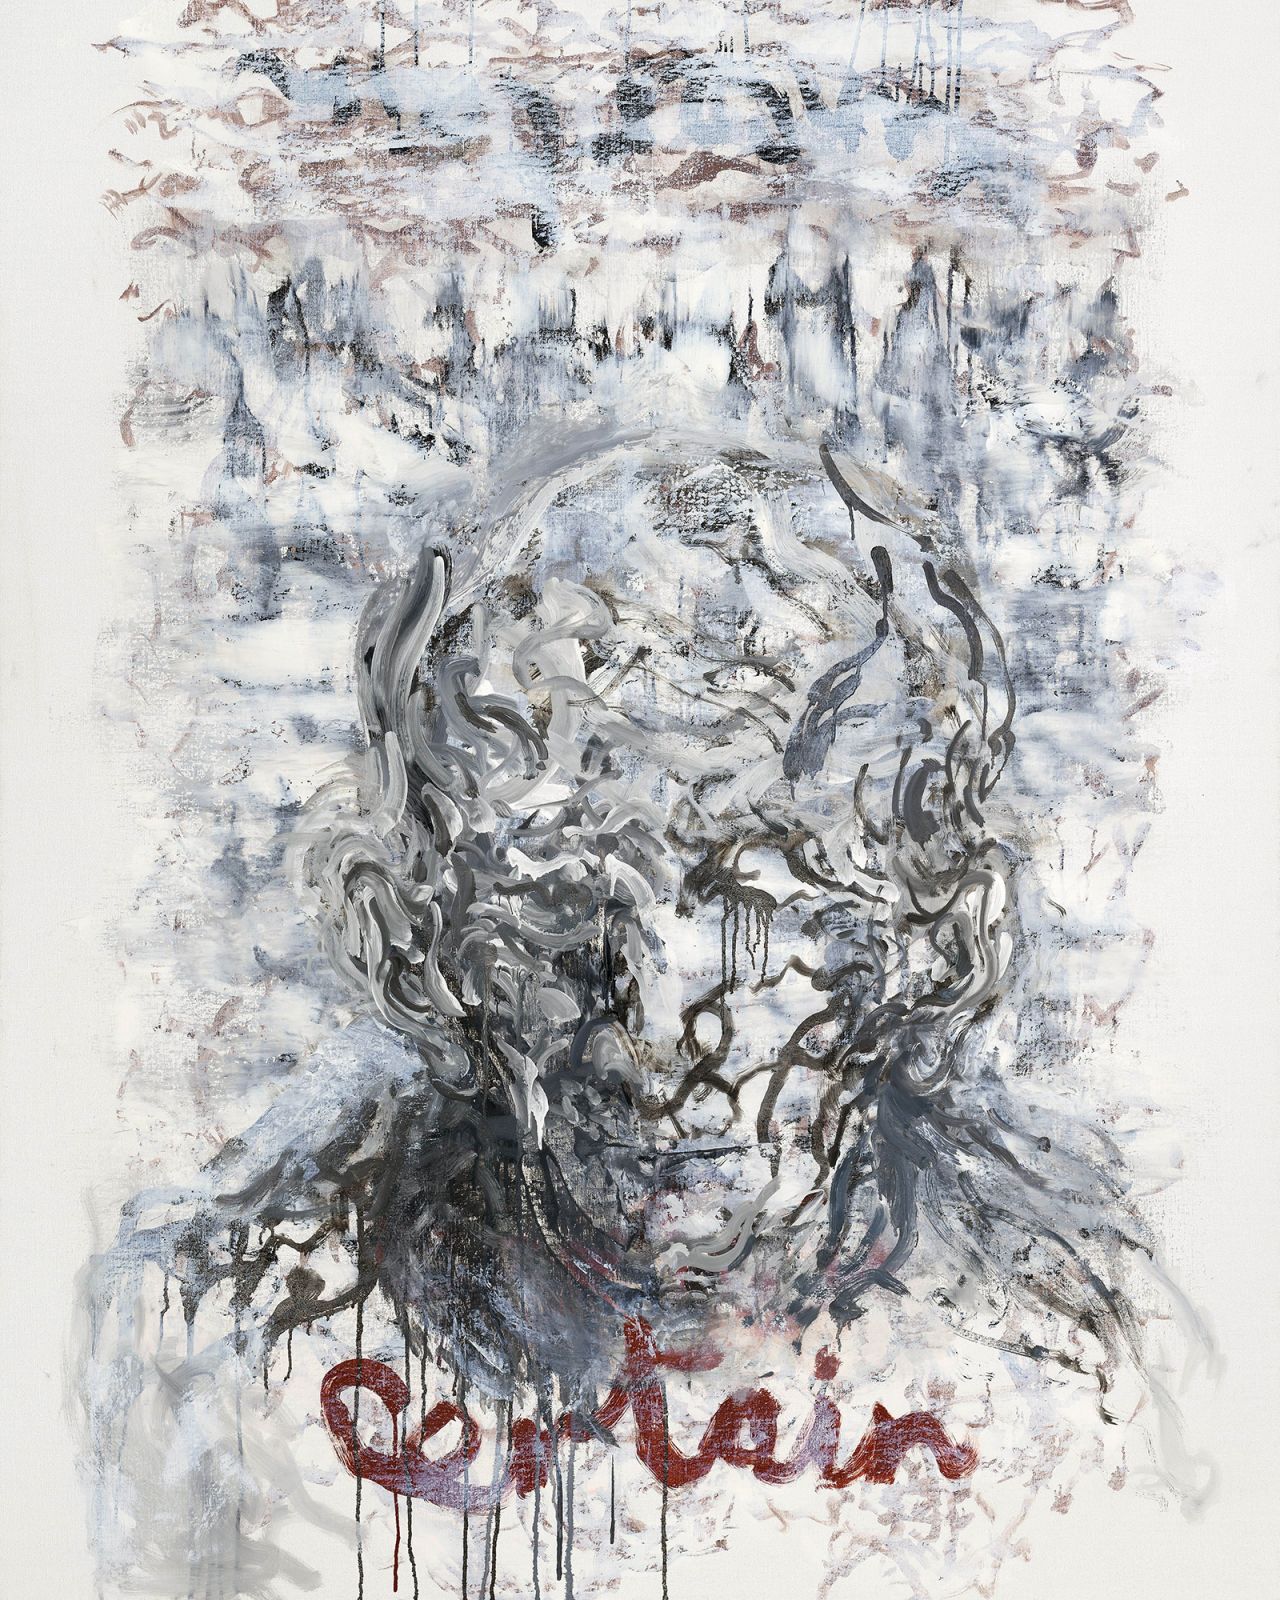 Maggi Hambling's oil on canvas piece "Certain" (2017).